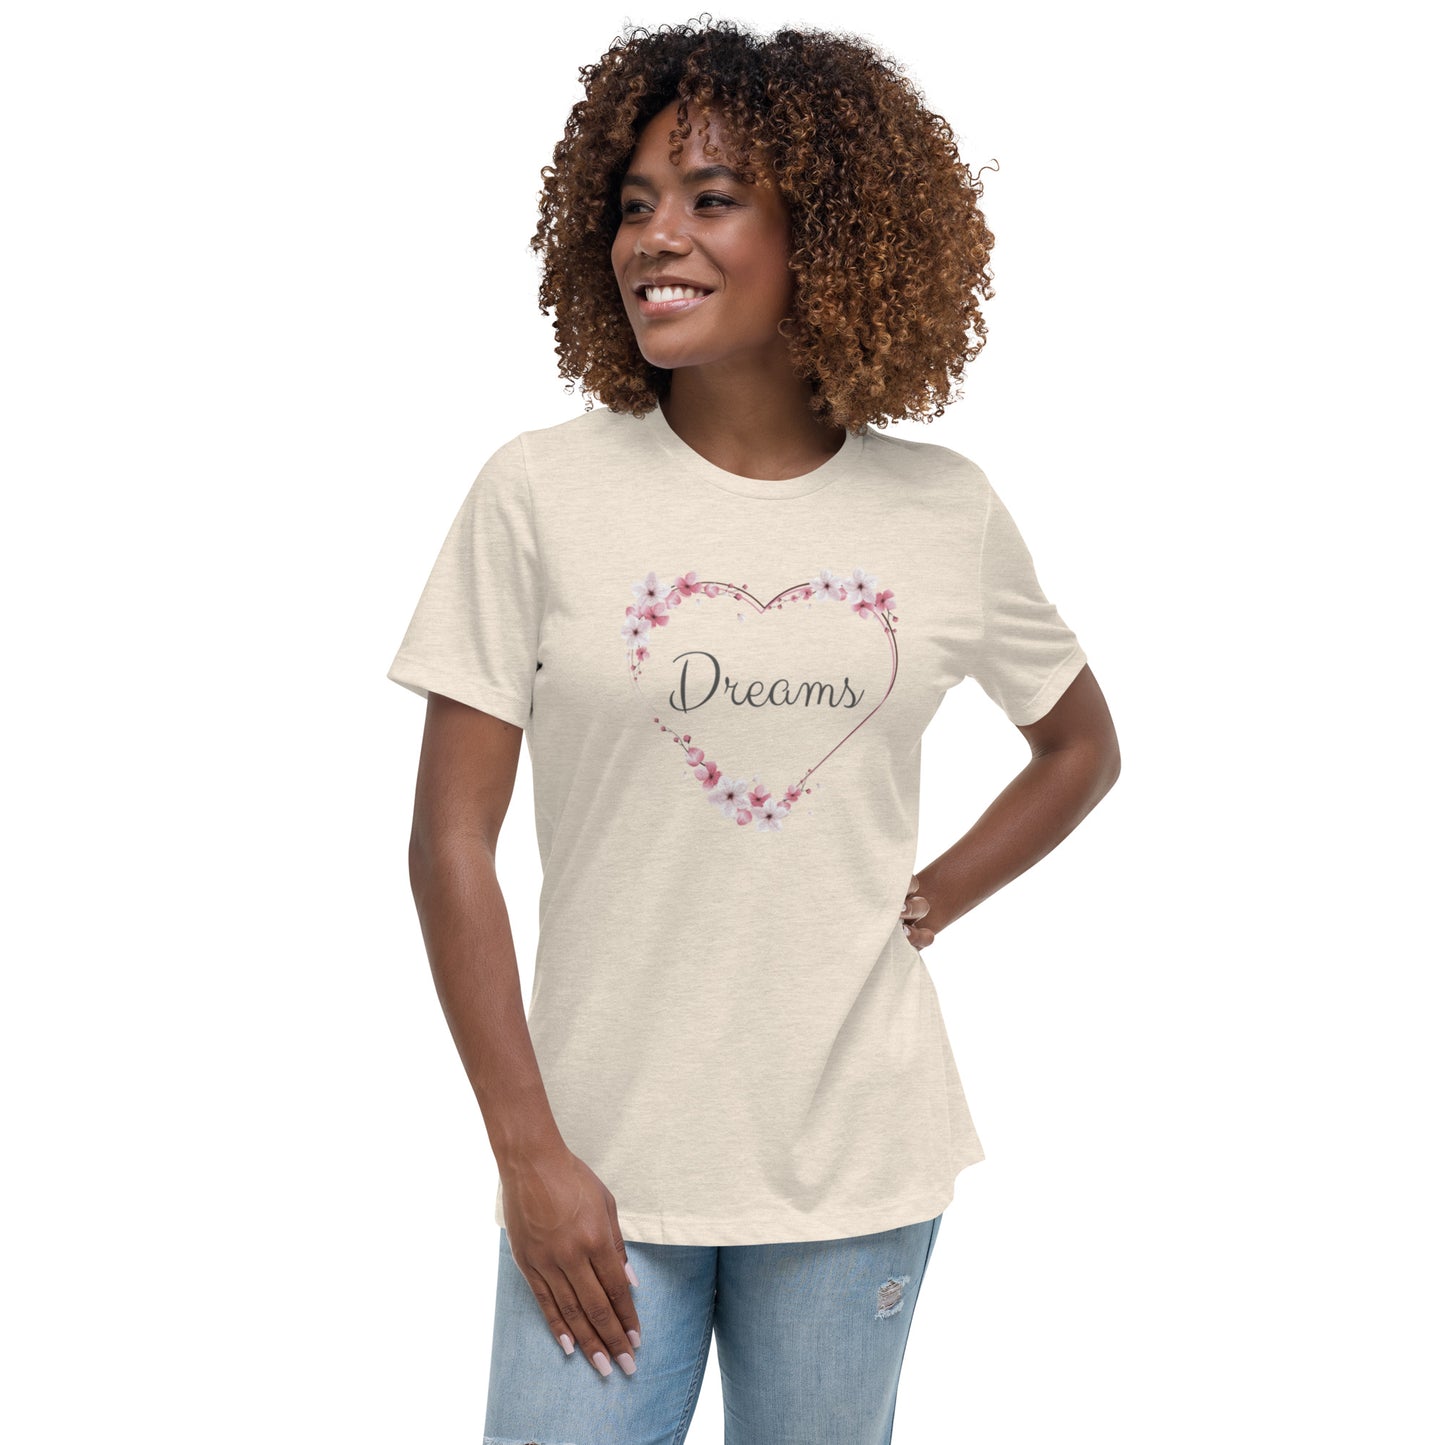 Dreams Heart T-shirt, Women